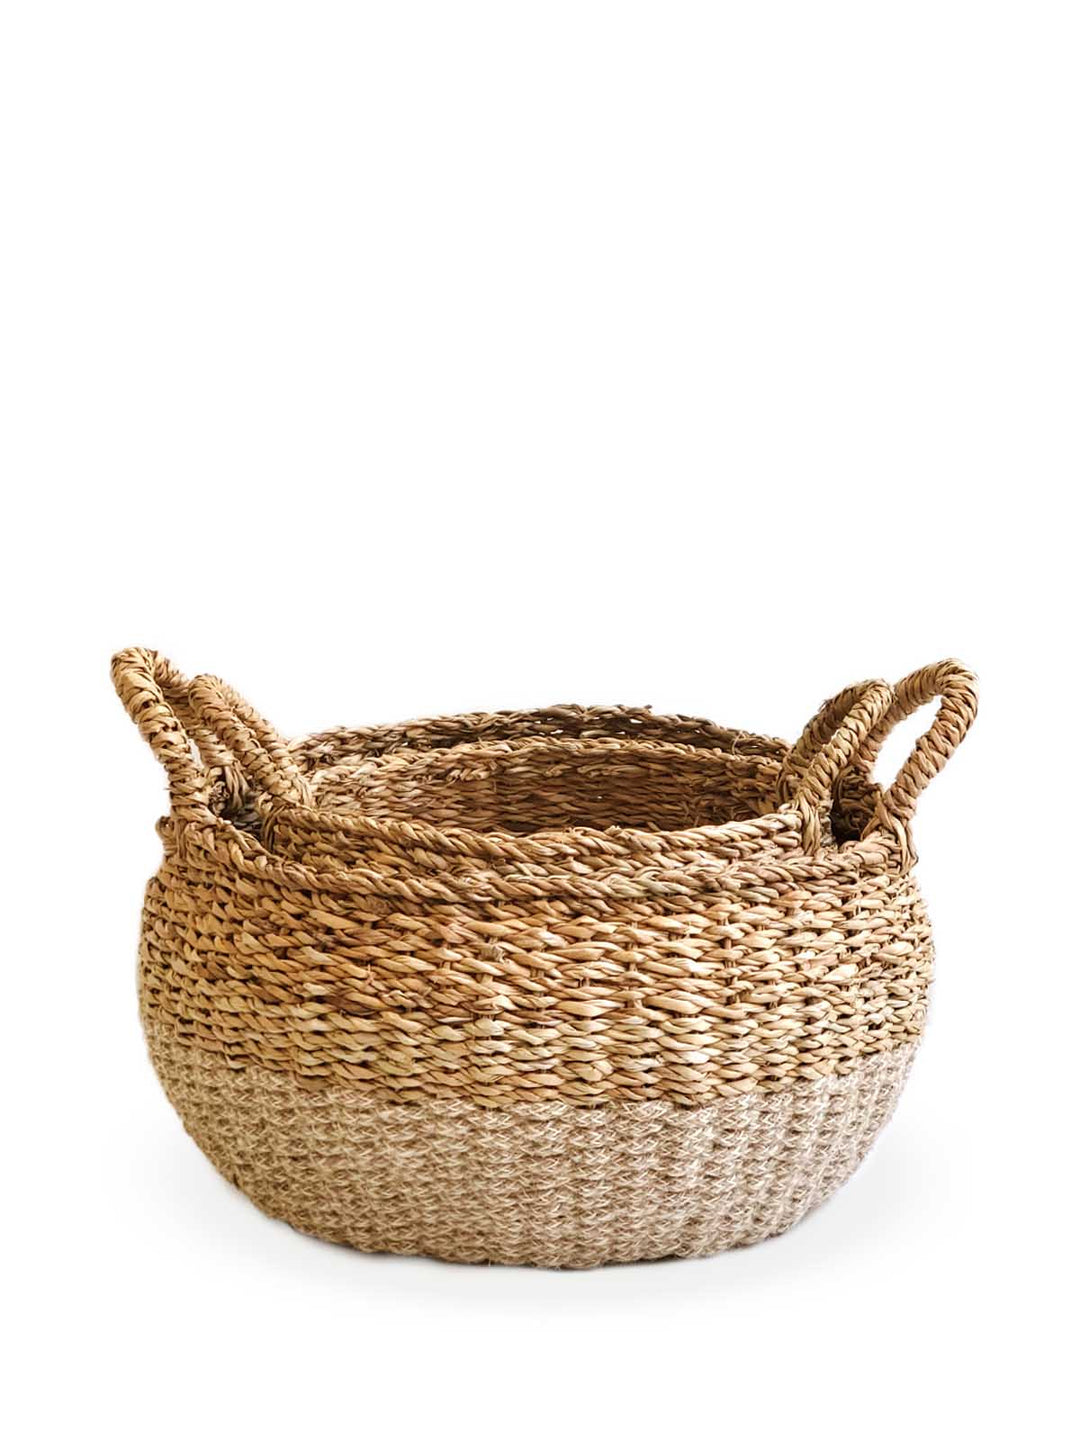 Ula Floor Basket - Natural Seagrass Jute Eco Friendly-5